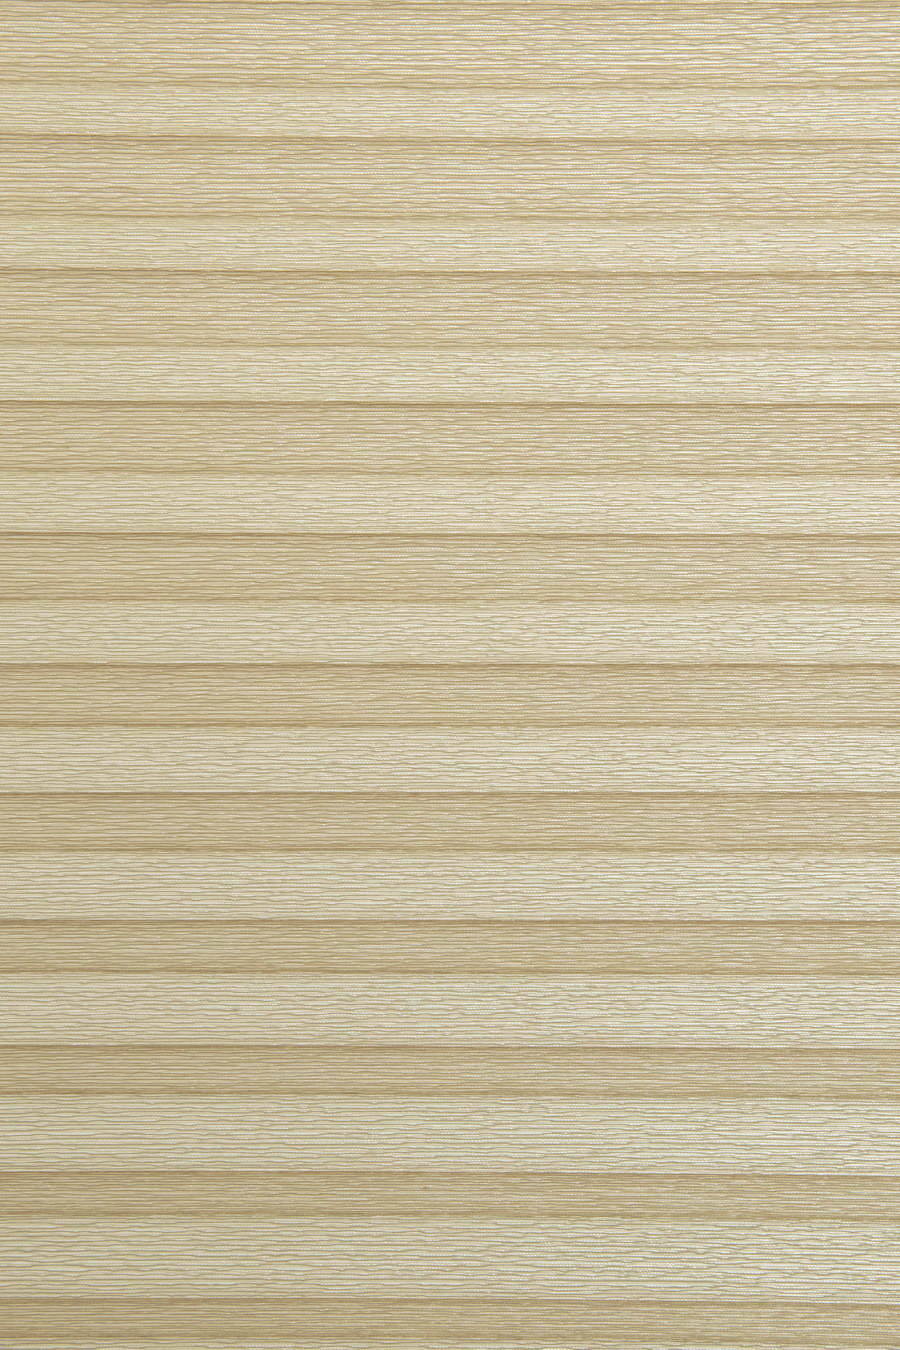 Ткань WALNUT beige 3405 для штор плиссе